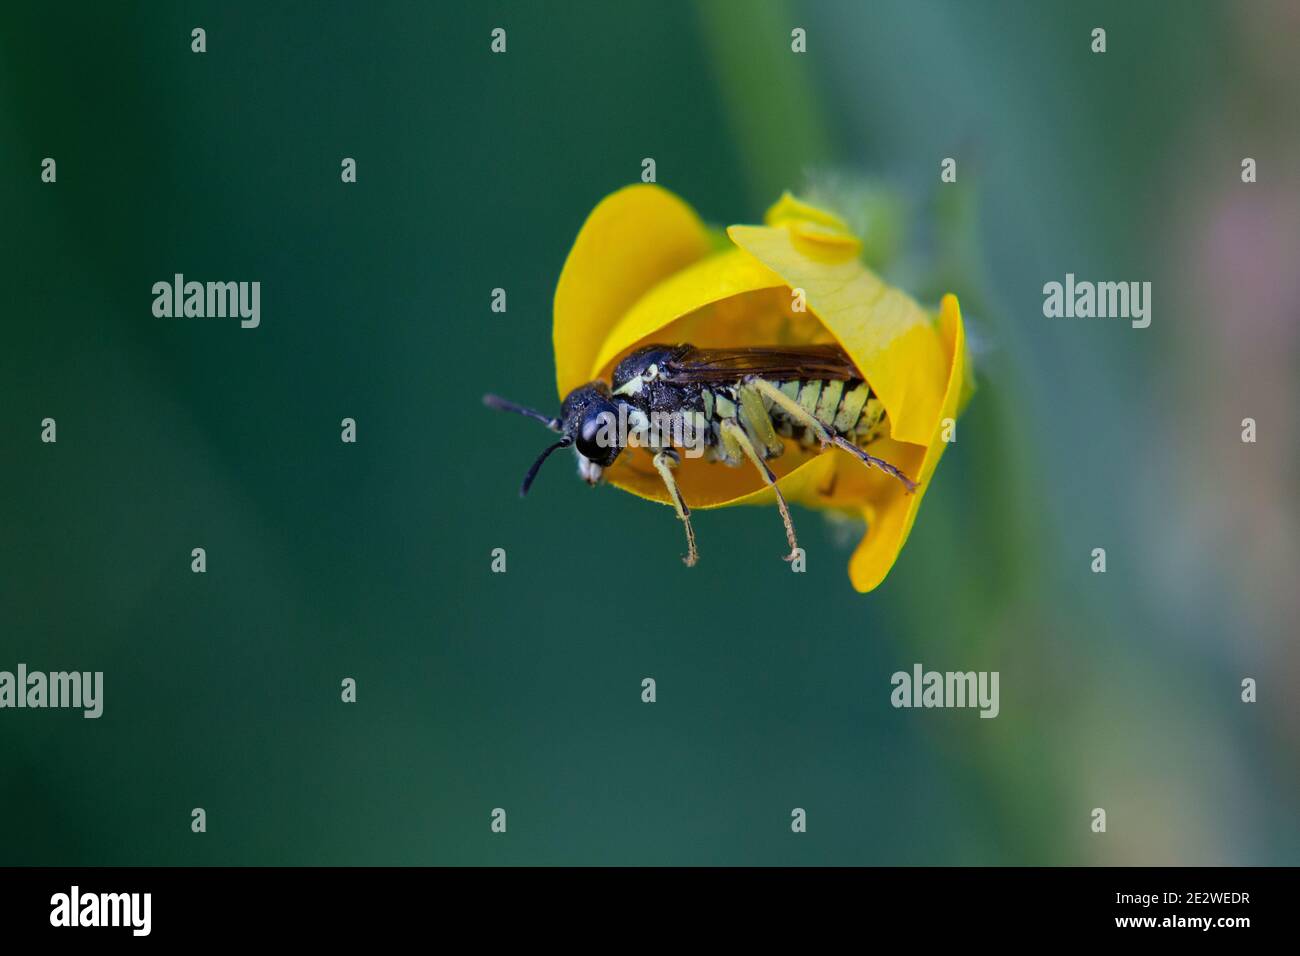 Avispa digger (Argogorytes mystaceus) adulto en una hermosa flor amarilla (Mariposa arrastrada - Ranunculus se vuelve a penar) sobre un fondo verde Foto de stock